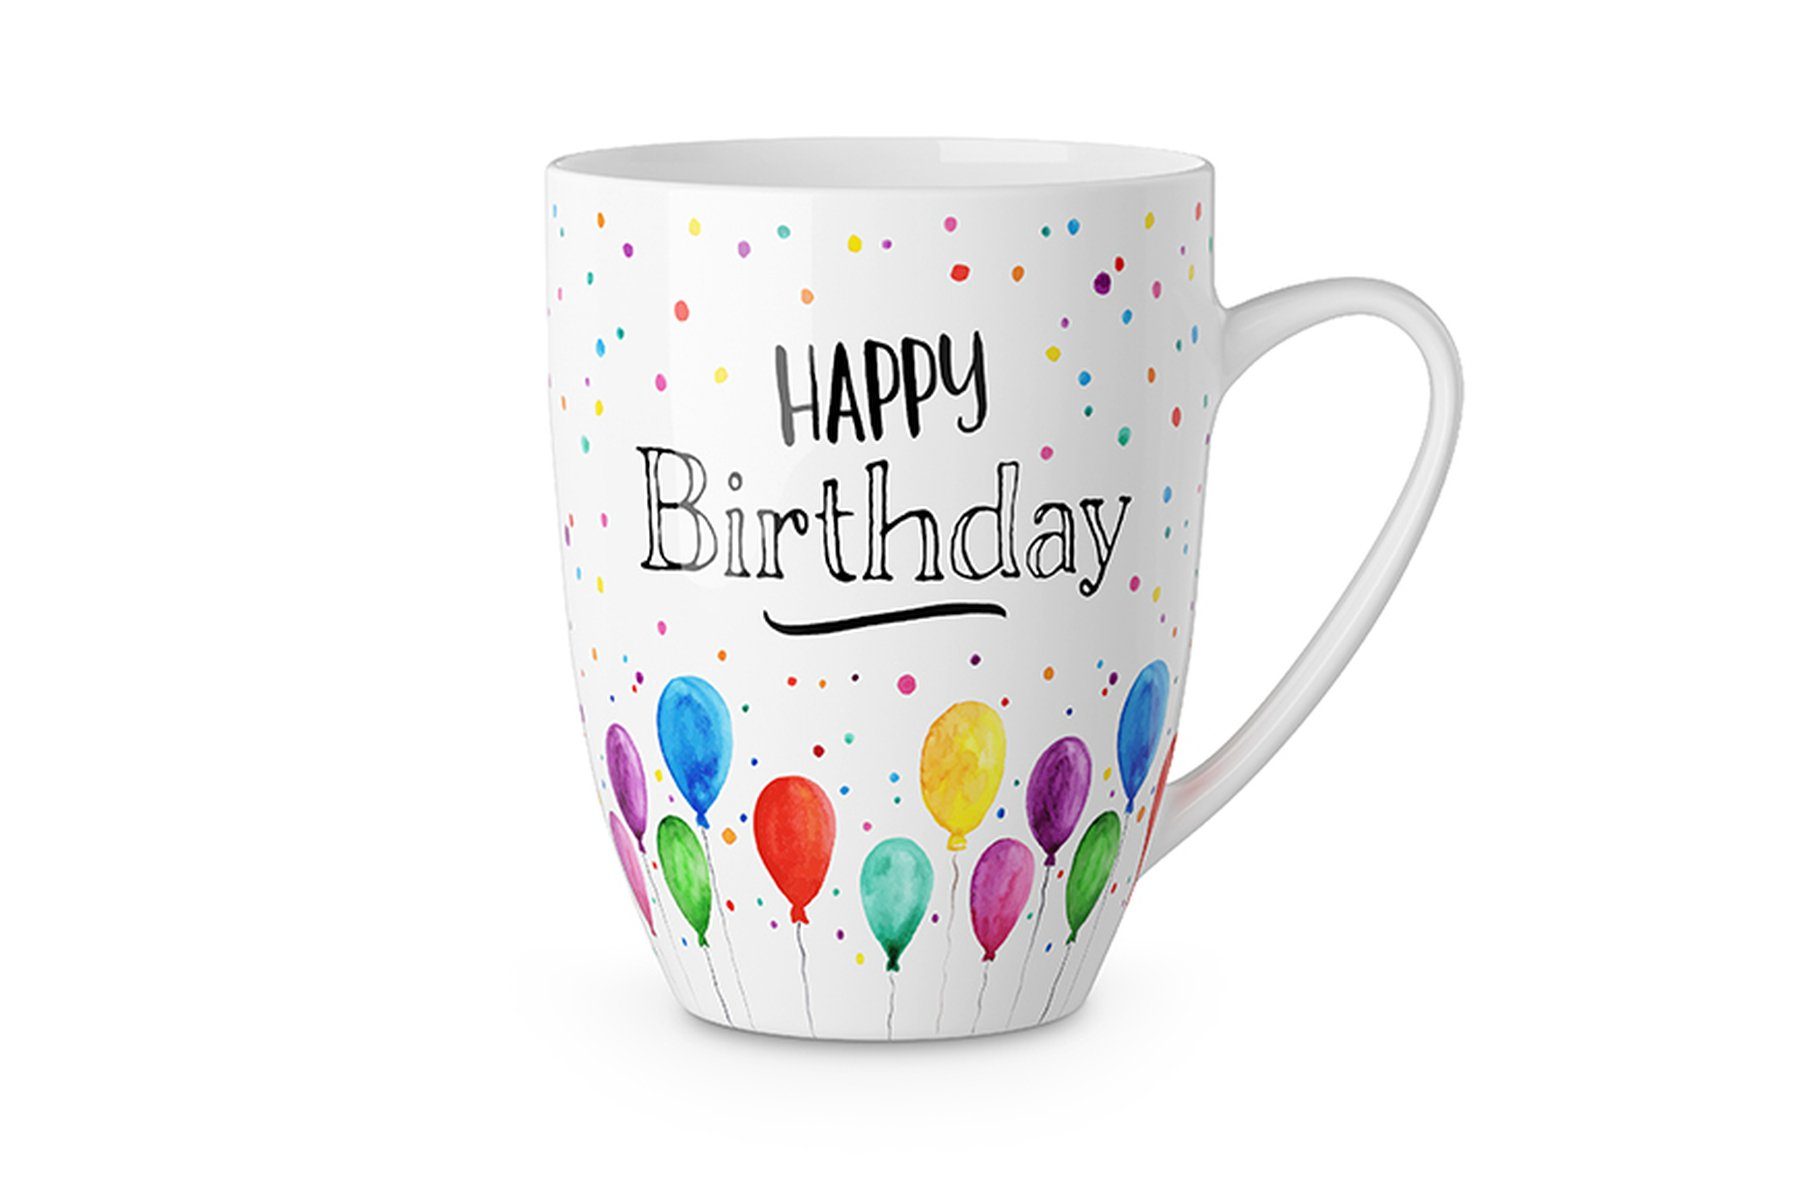 La Vida Tasse Kaffeetasse Kaffeebecher Teetasse Kakao Tasse "Becher für dich" la Happy Birthday 950239